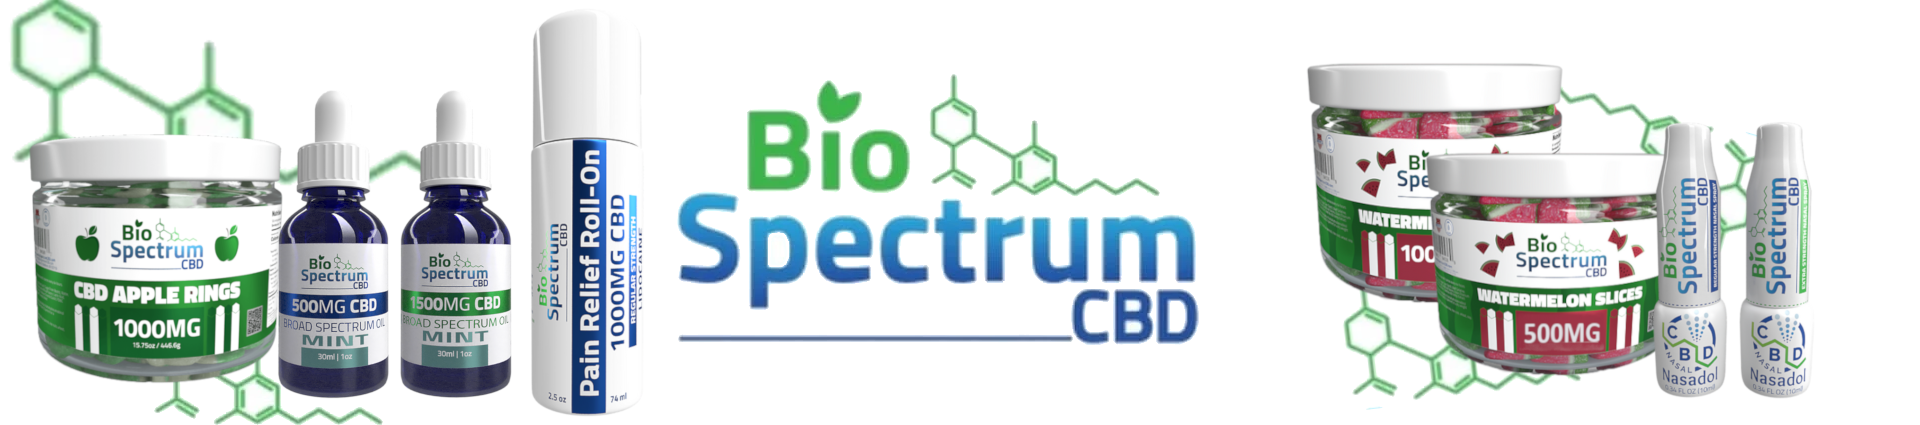 BioSpectrum CBD